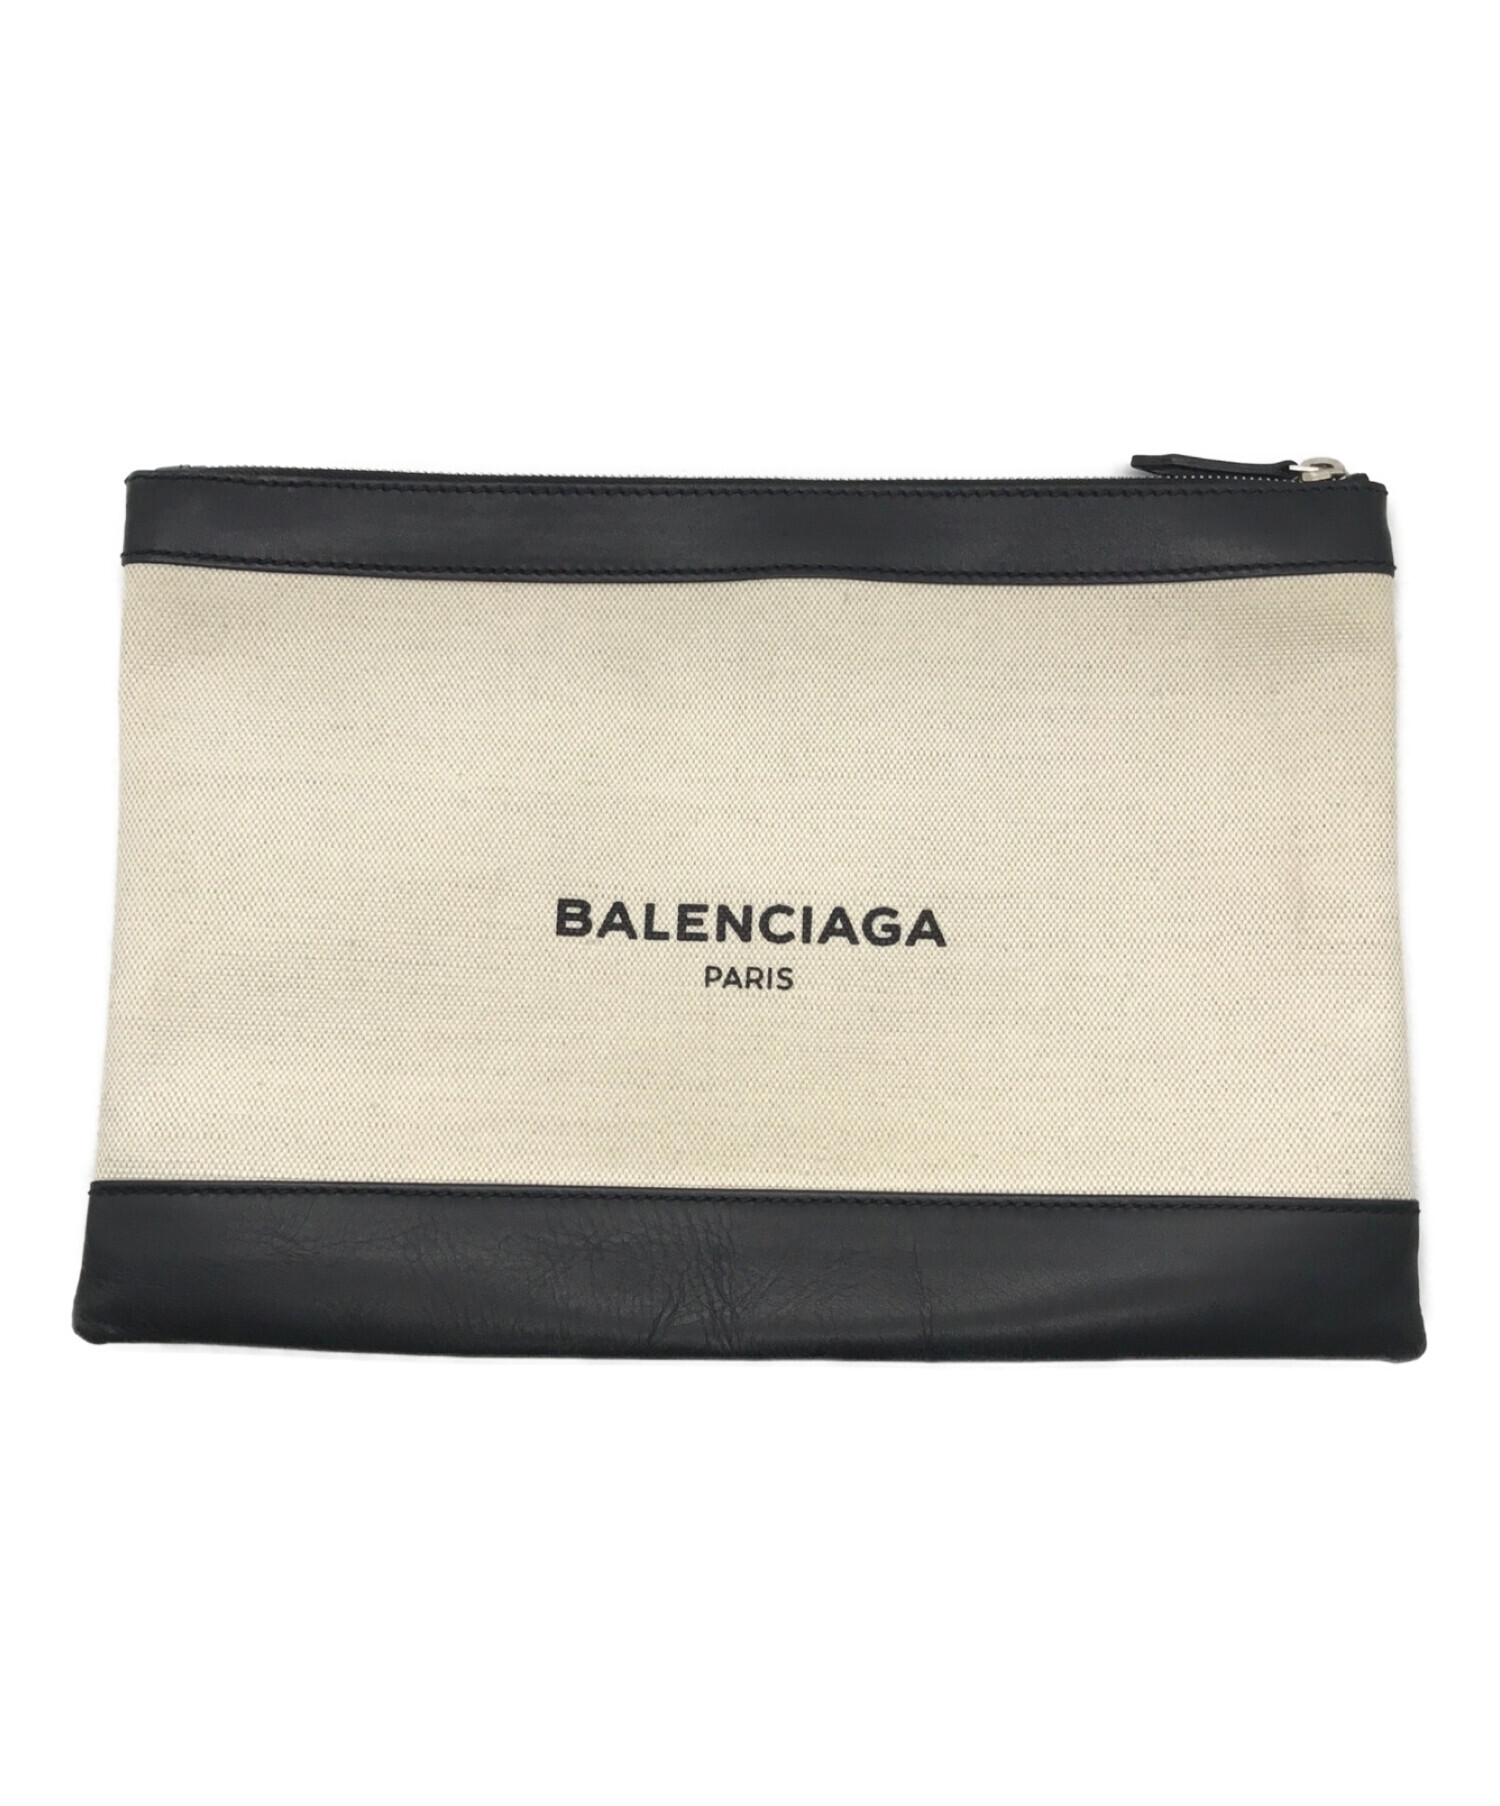 BALENCIAGA (バレンシアガ) キャンバスレザークラッチバッグ アイボリー×ブラック